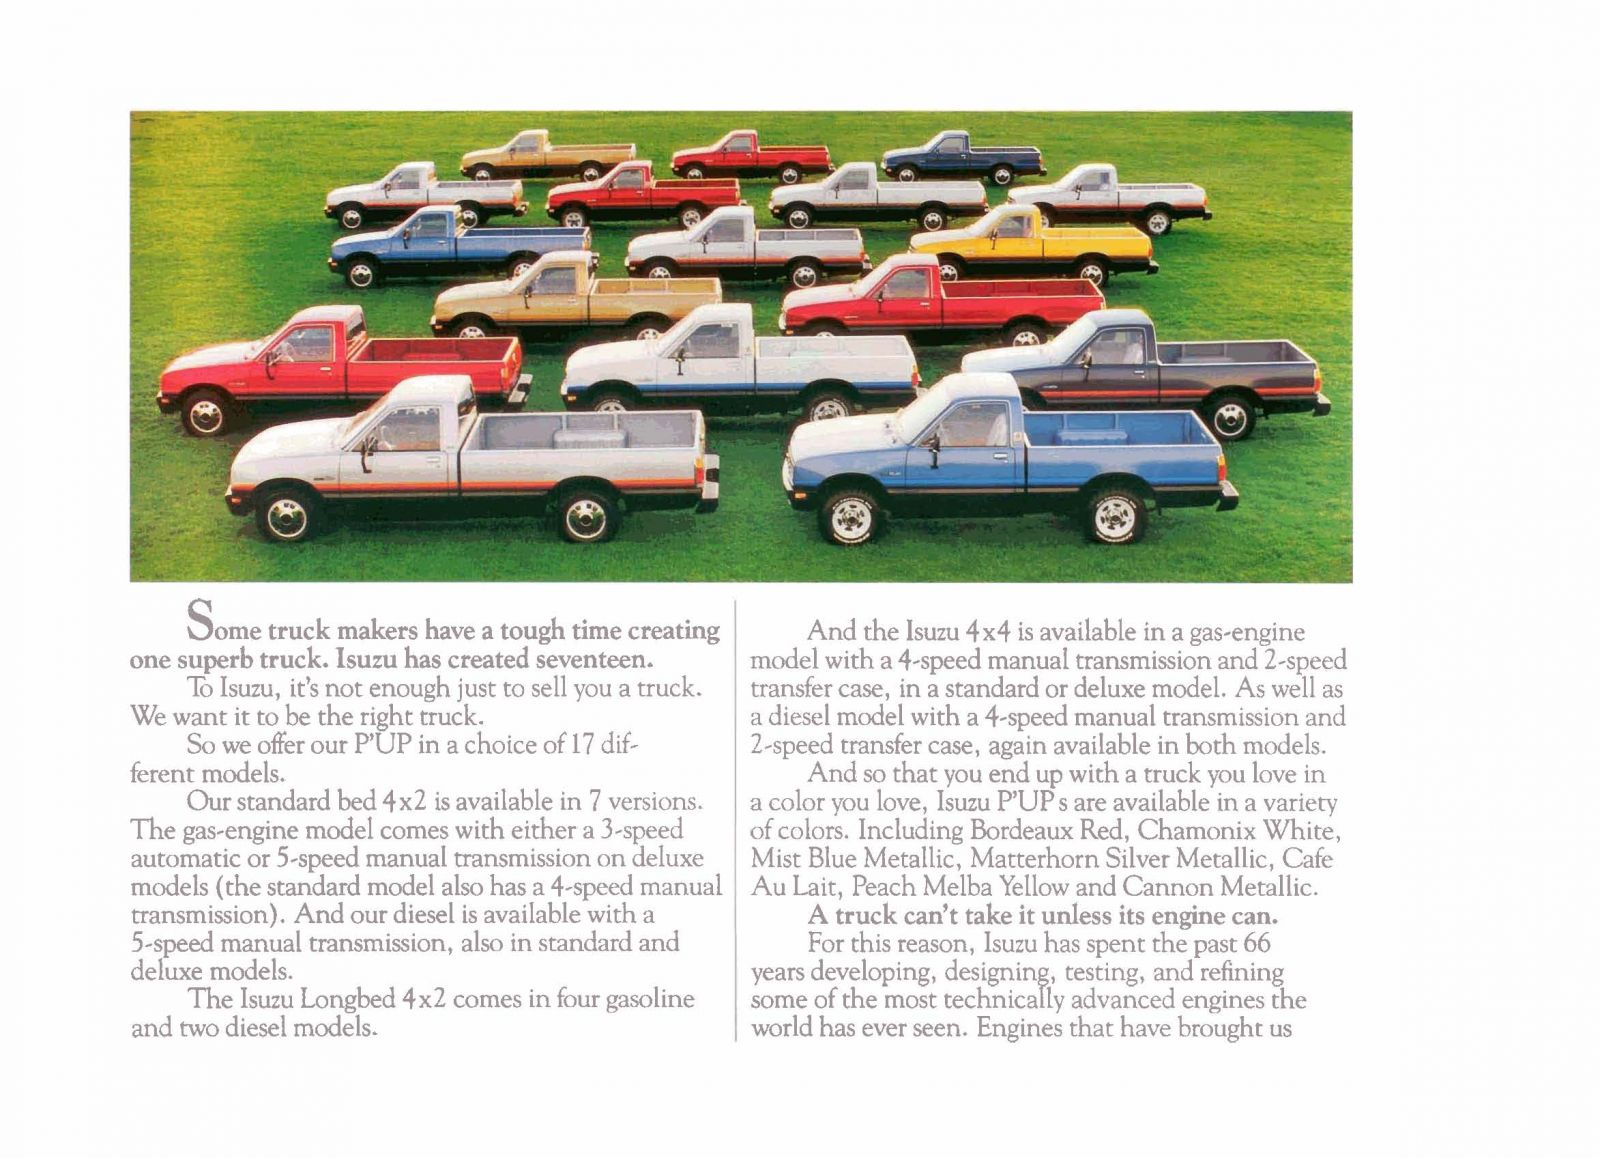 1982 Isuzu Pickups Page 08.jpg